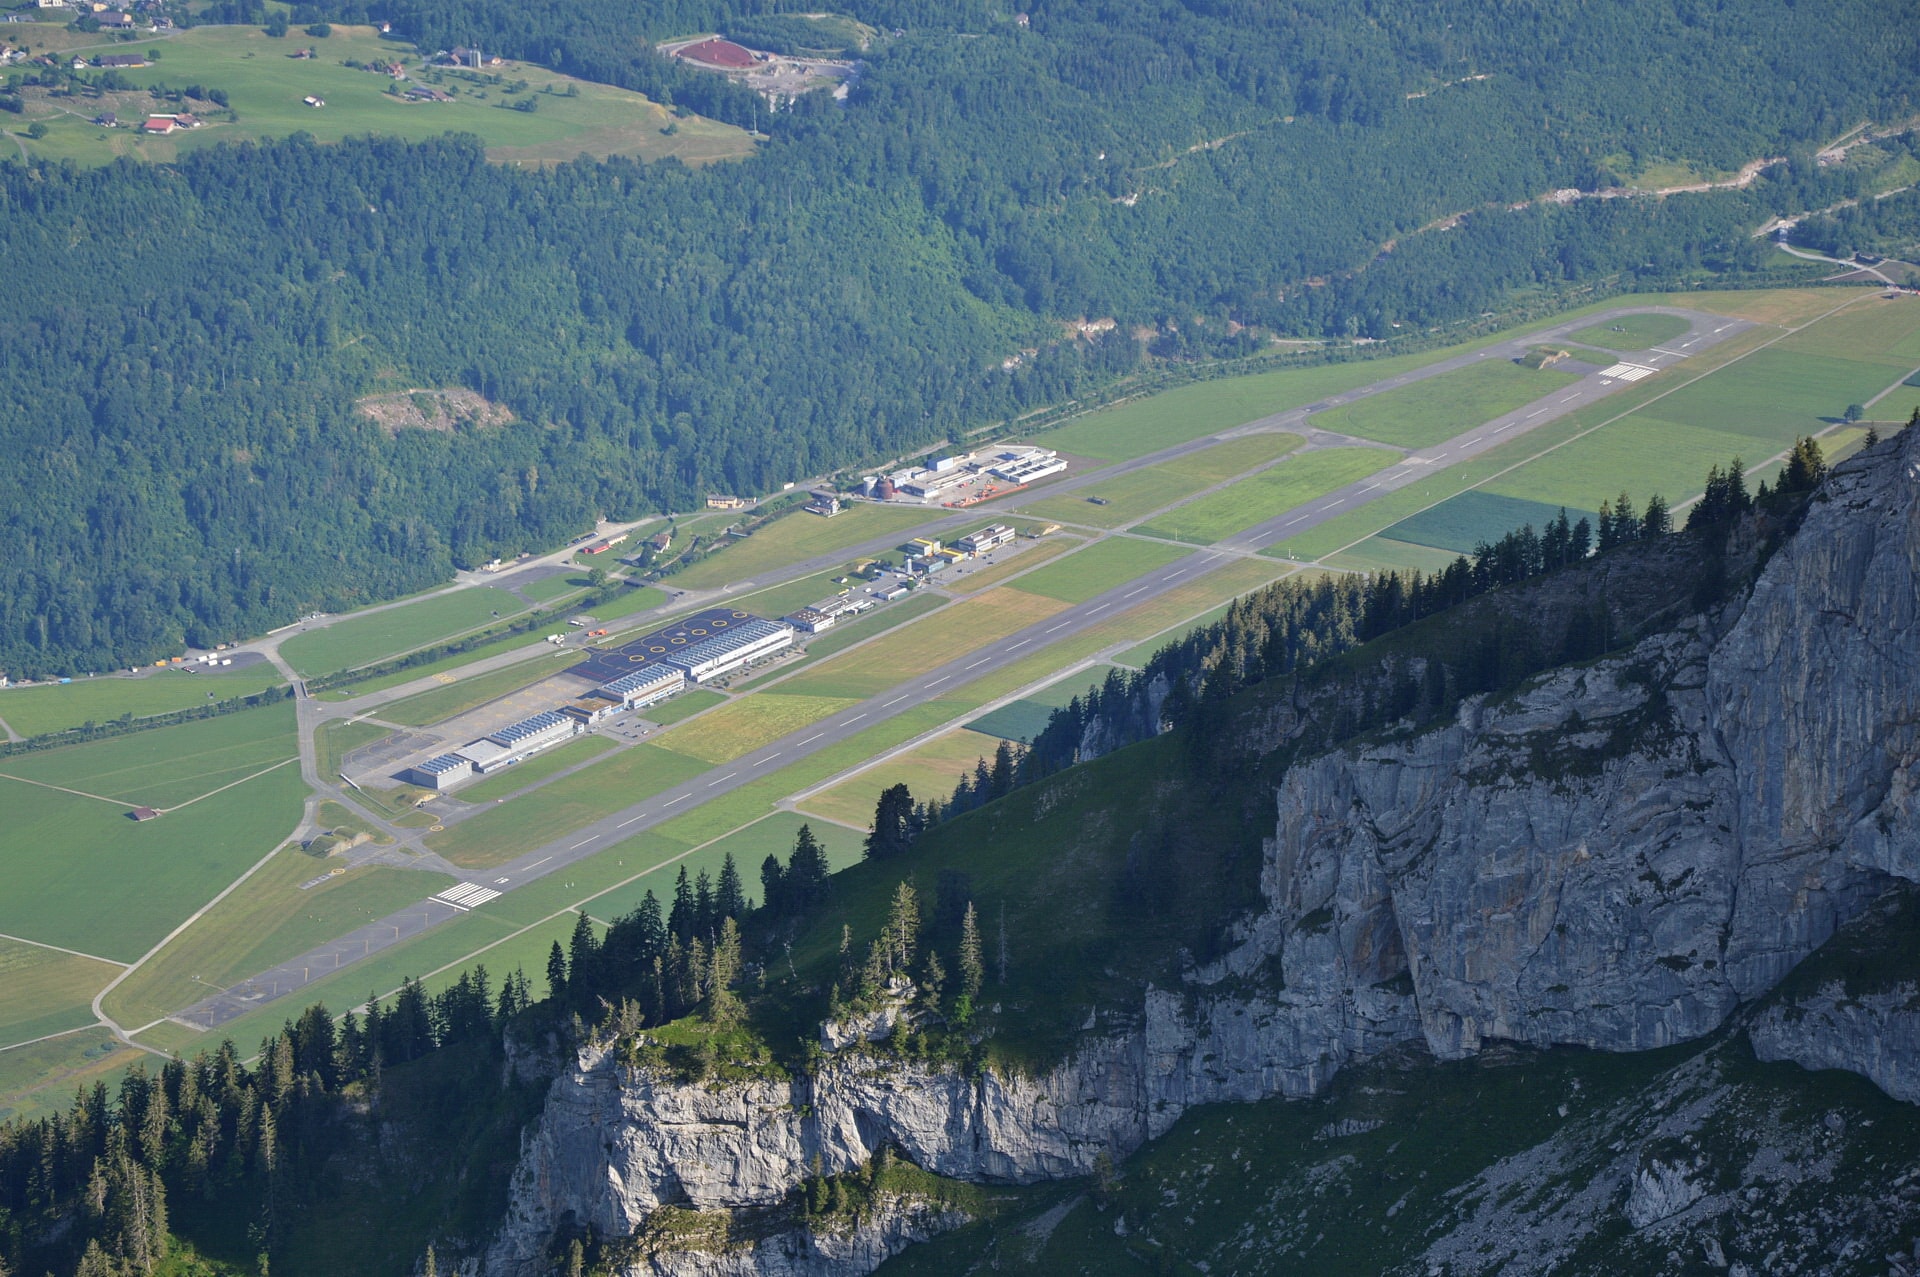 Alpnach airport